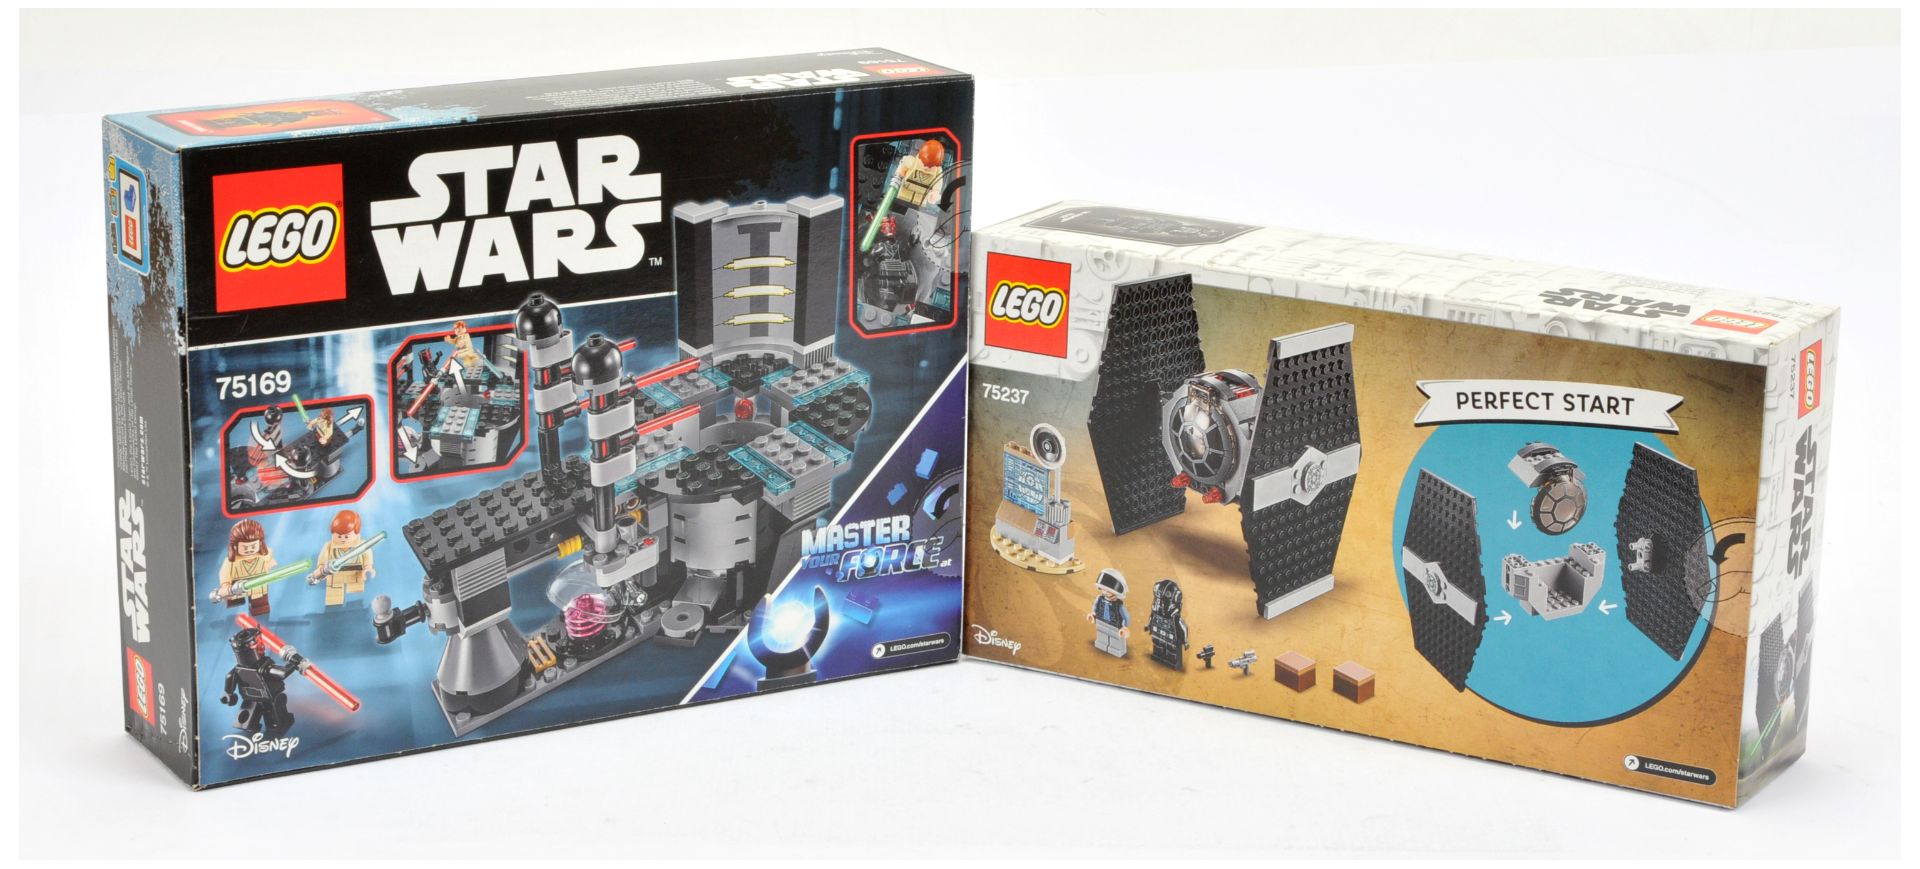 Lego Star Wars sets x 2 - Image 2 of 2